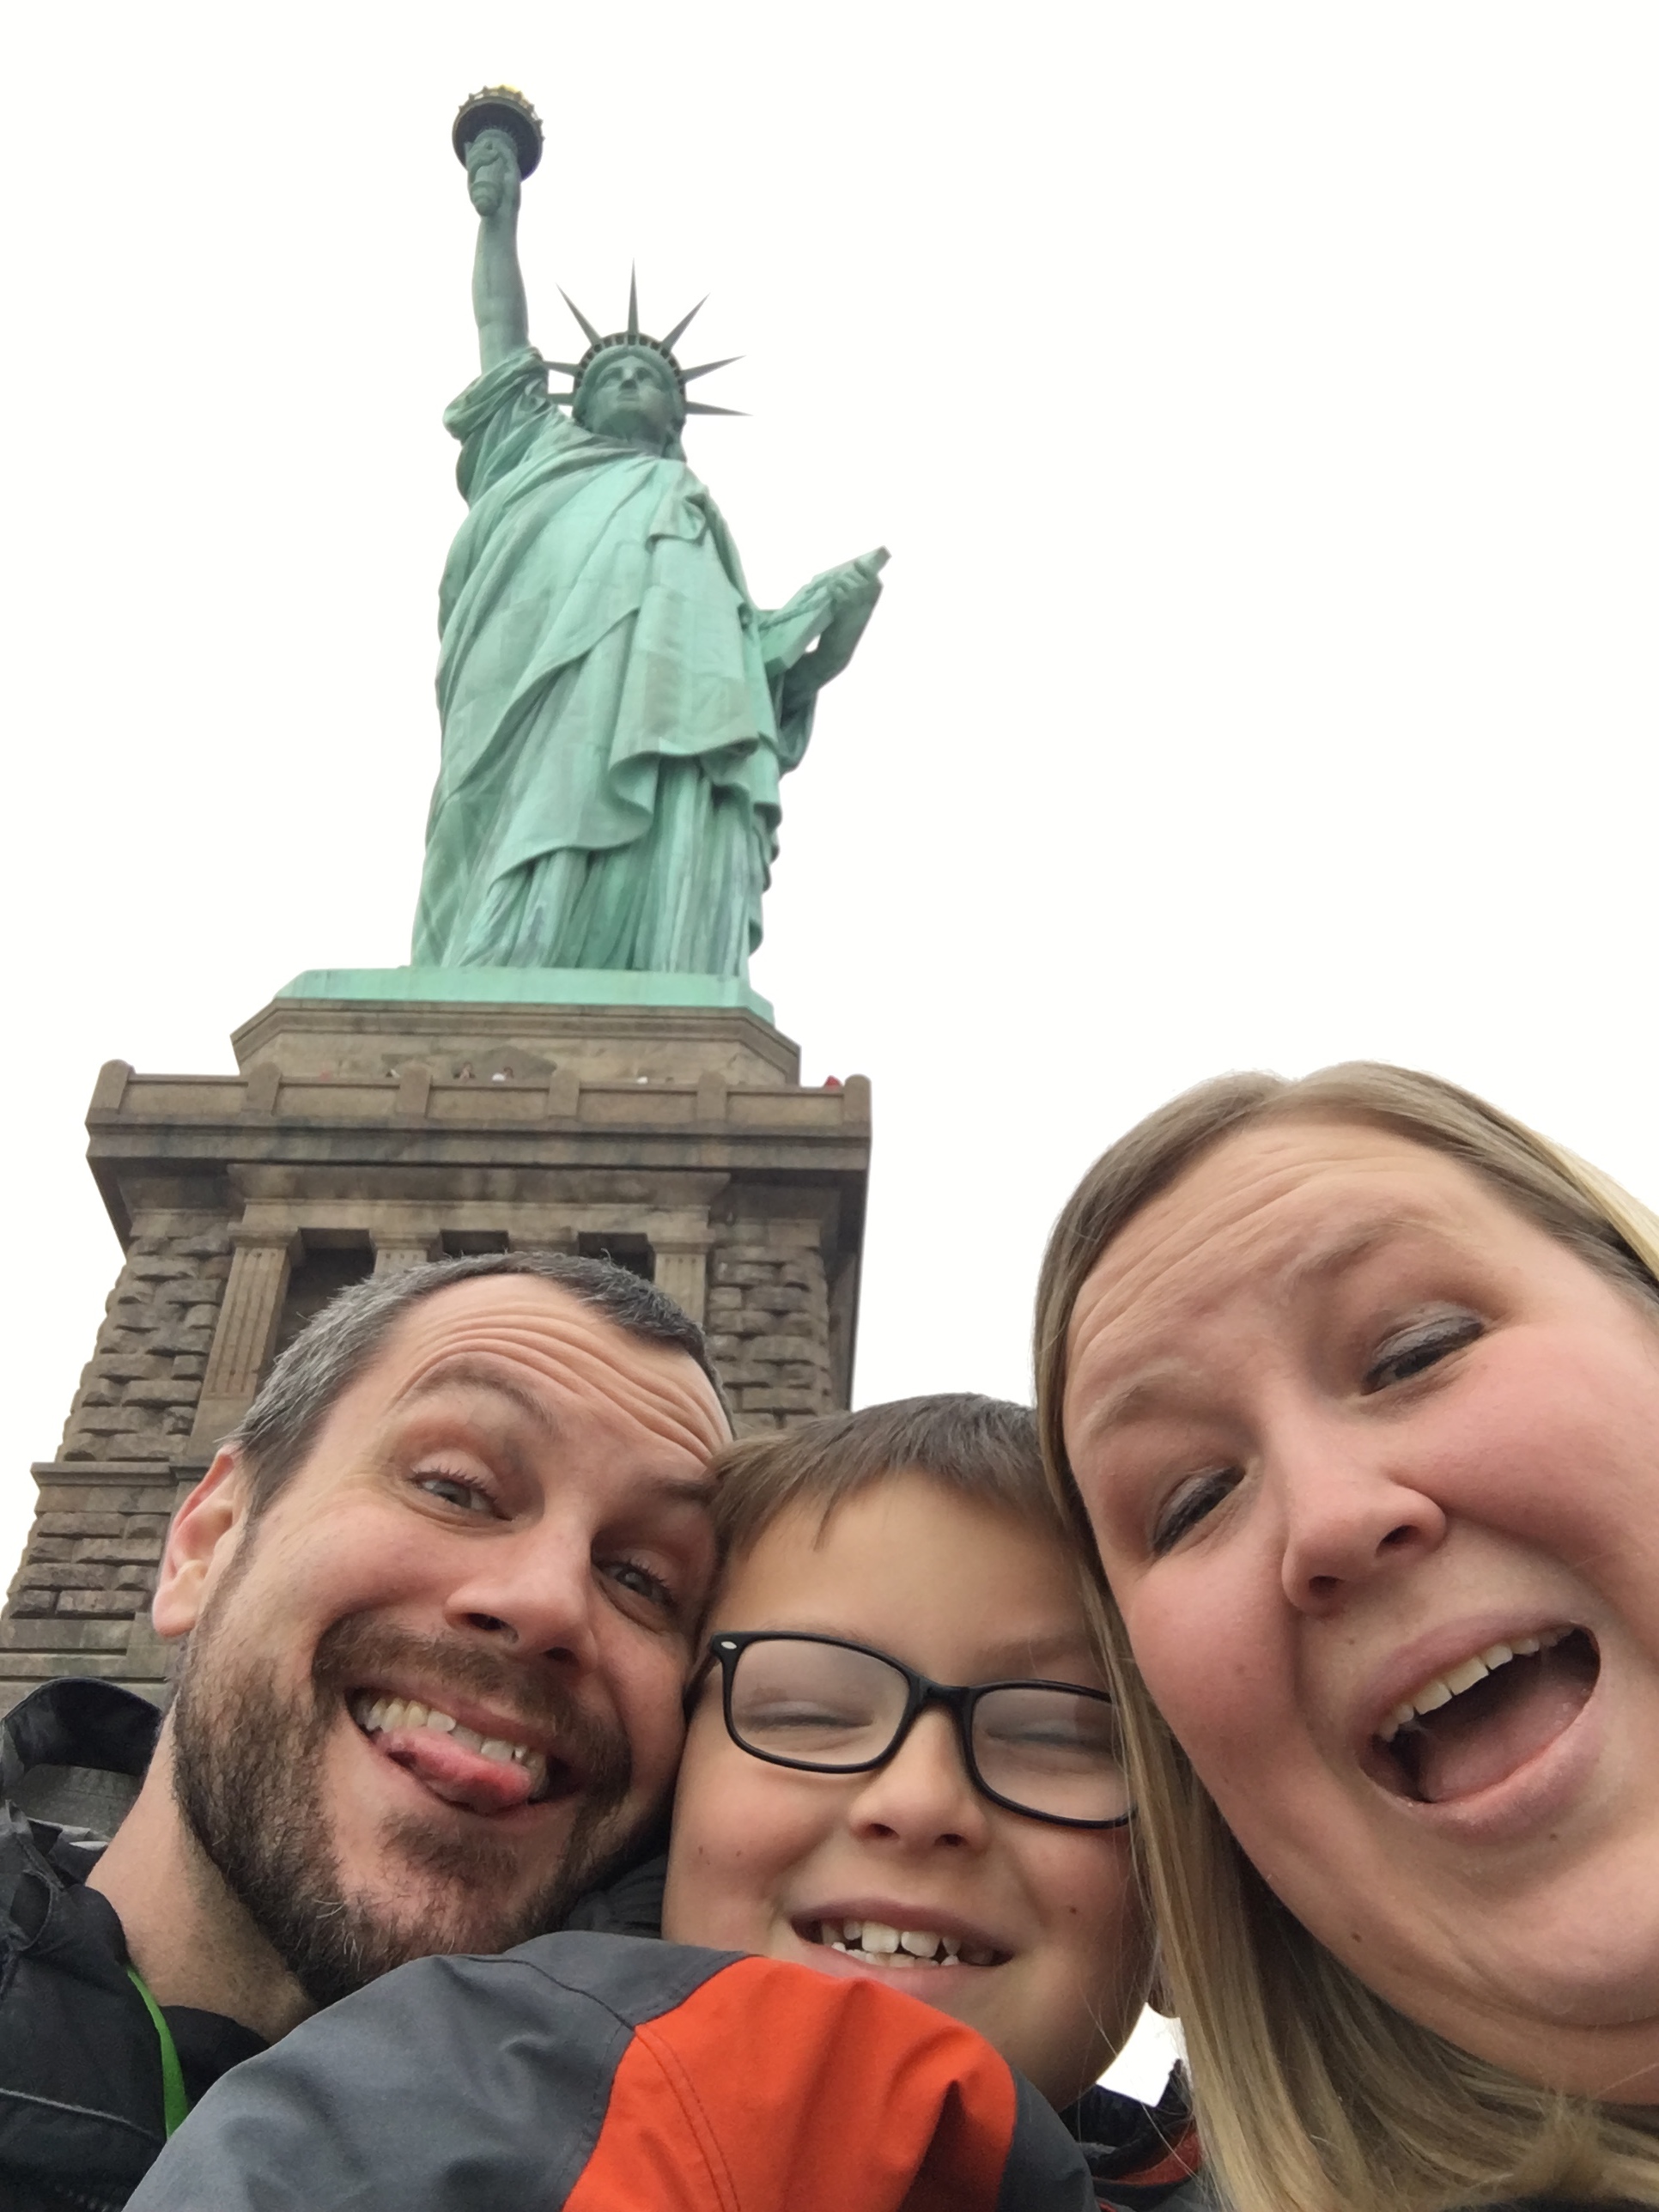 Goofy Statue of Liberty selfie